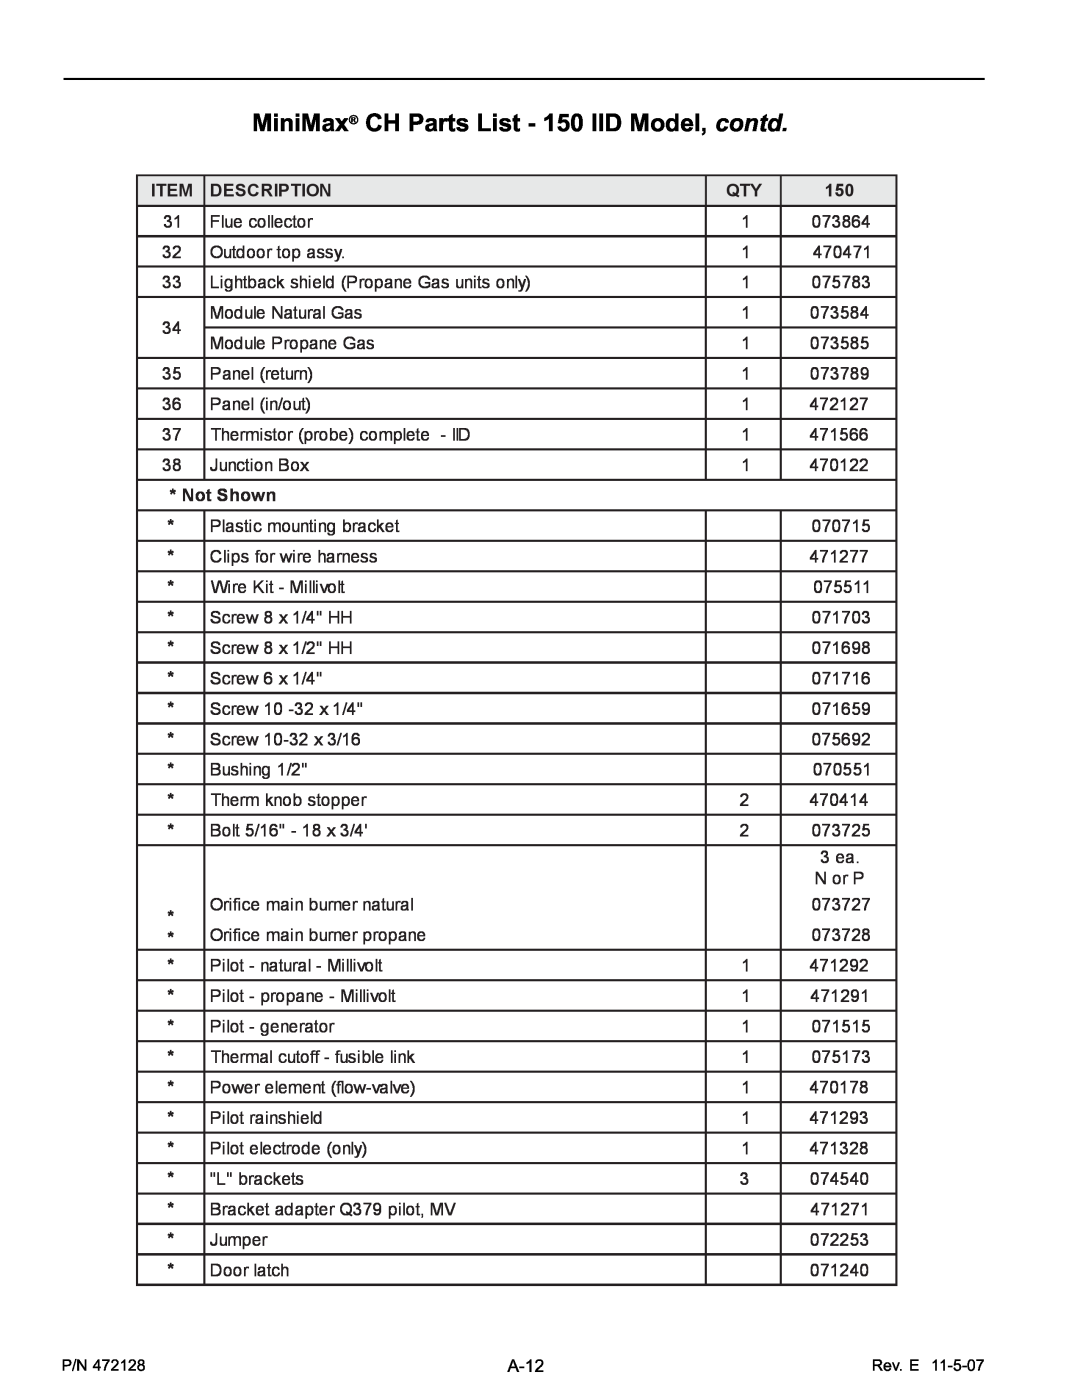 Pentair Hot Tub manual MiniMax CH Parts List - 150 IID Model, contd, Description, Not Shown, A-12 